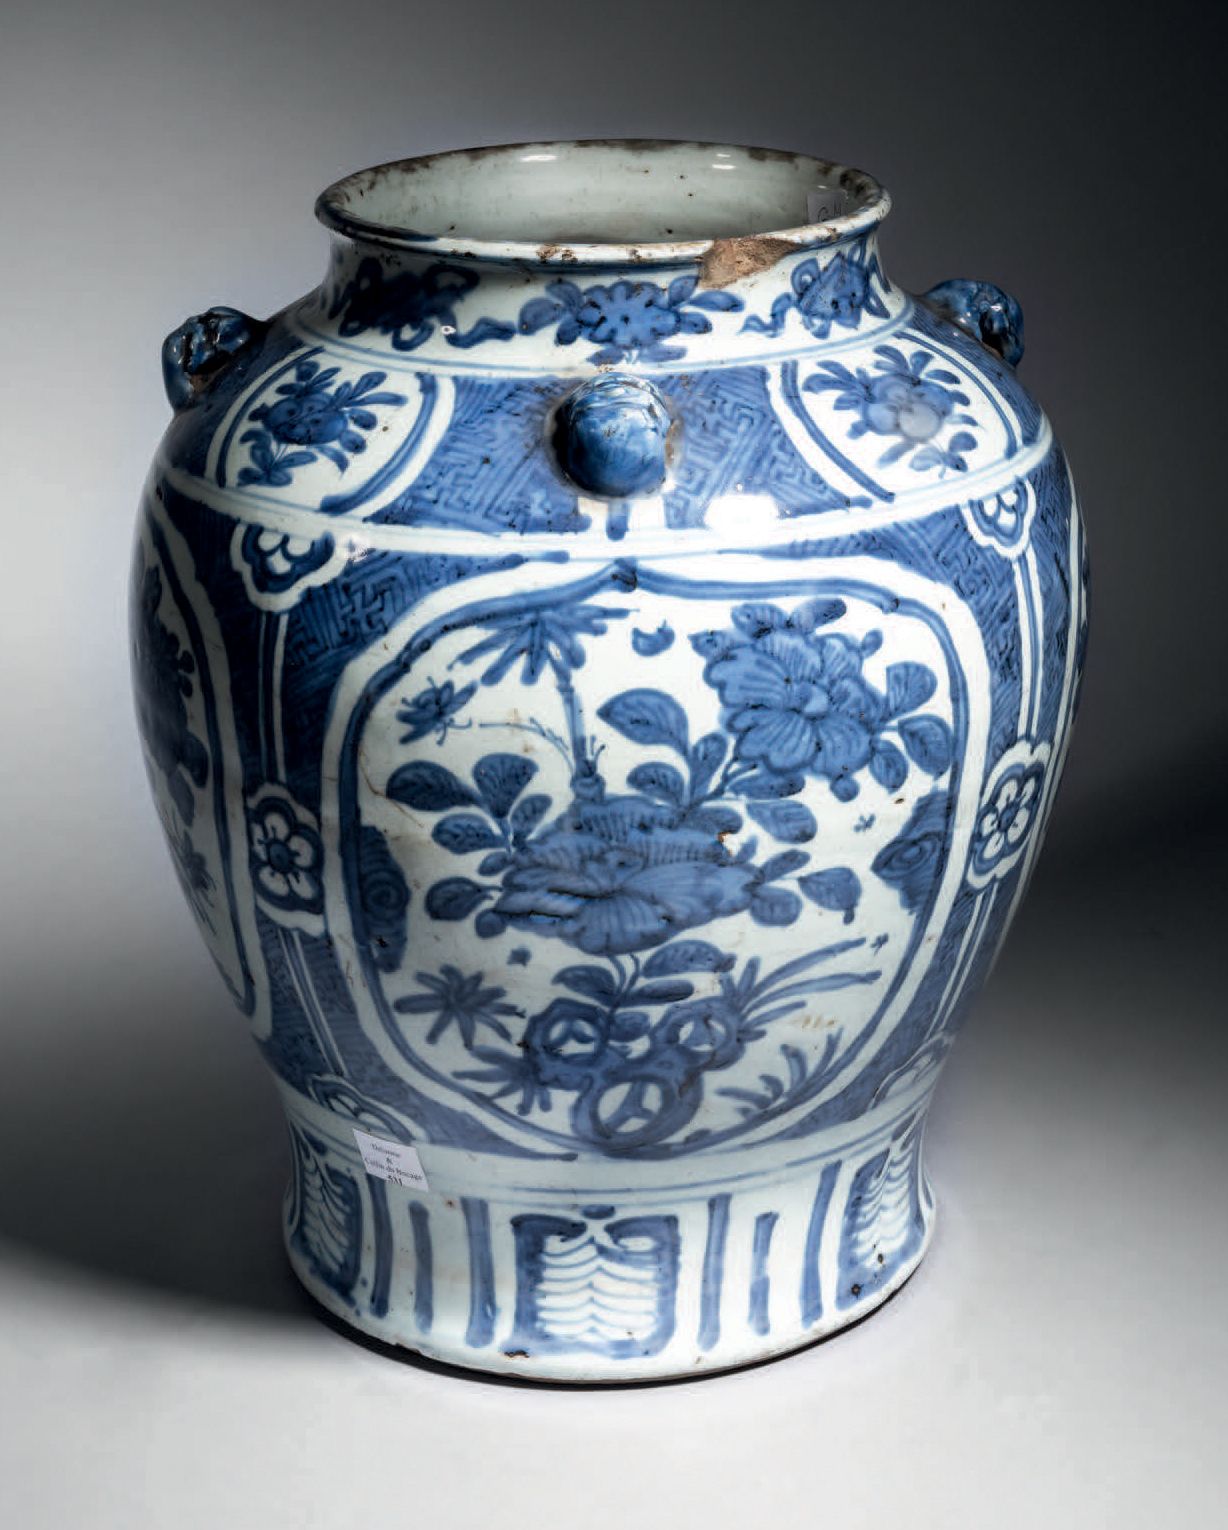 CHINE 瓷器花瓶，呈柱状，颈部有四圈装饰，蓝色格子背景上有蓝色单色的花纹装饰。
17世纪。
高31厘米。
颈部有伤痕。